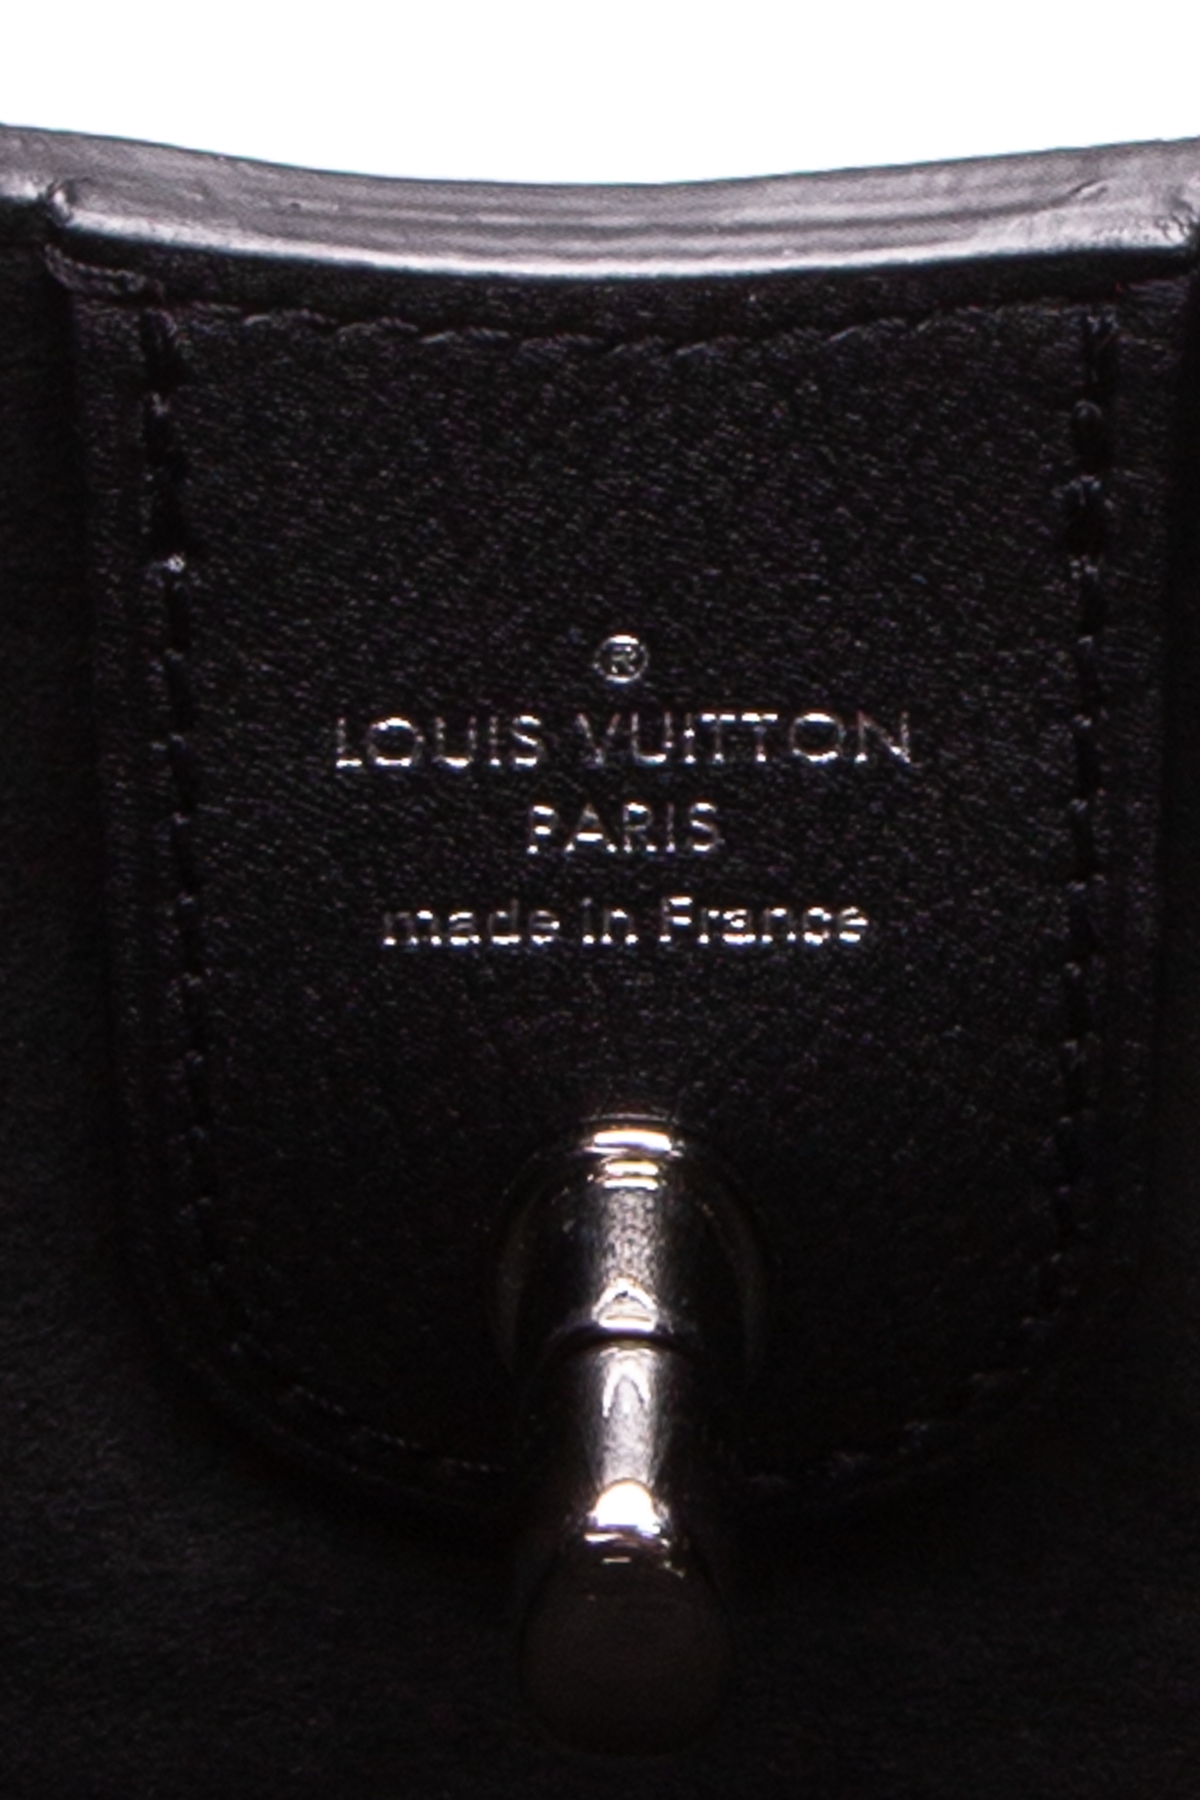 Louis Vuitton Lockme Hobo in Black